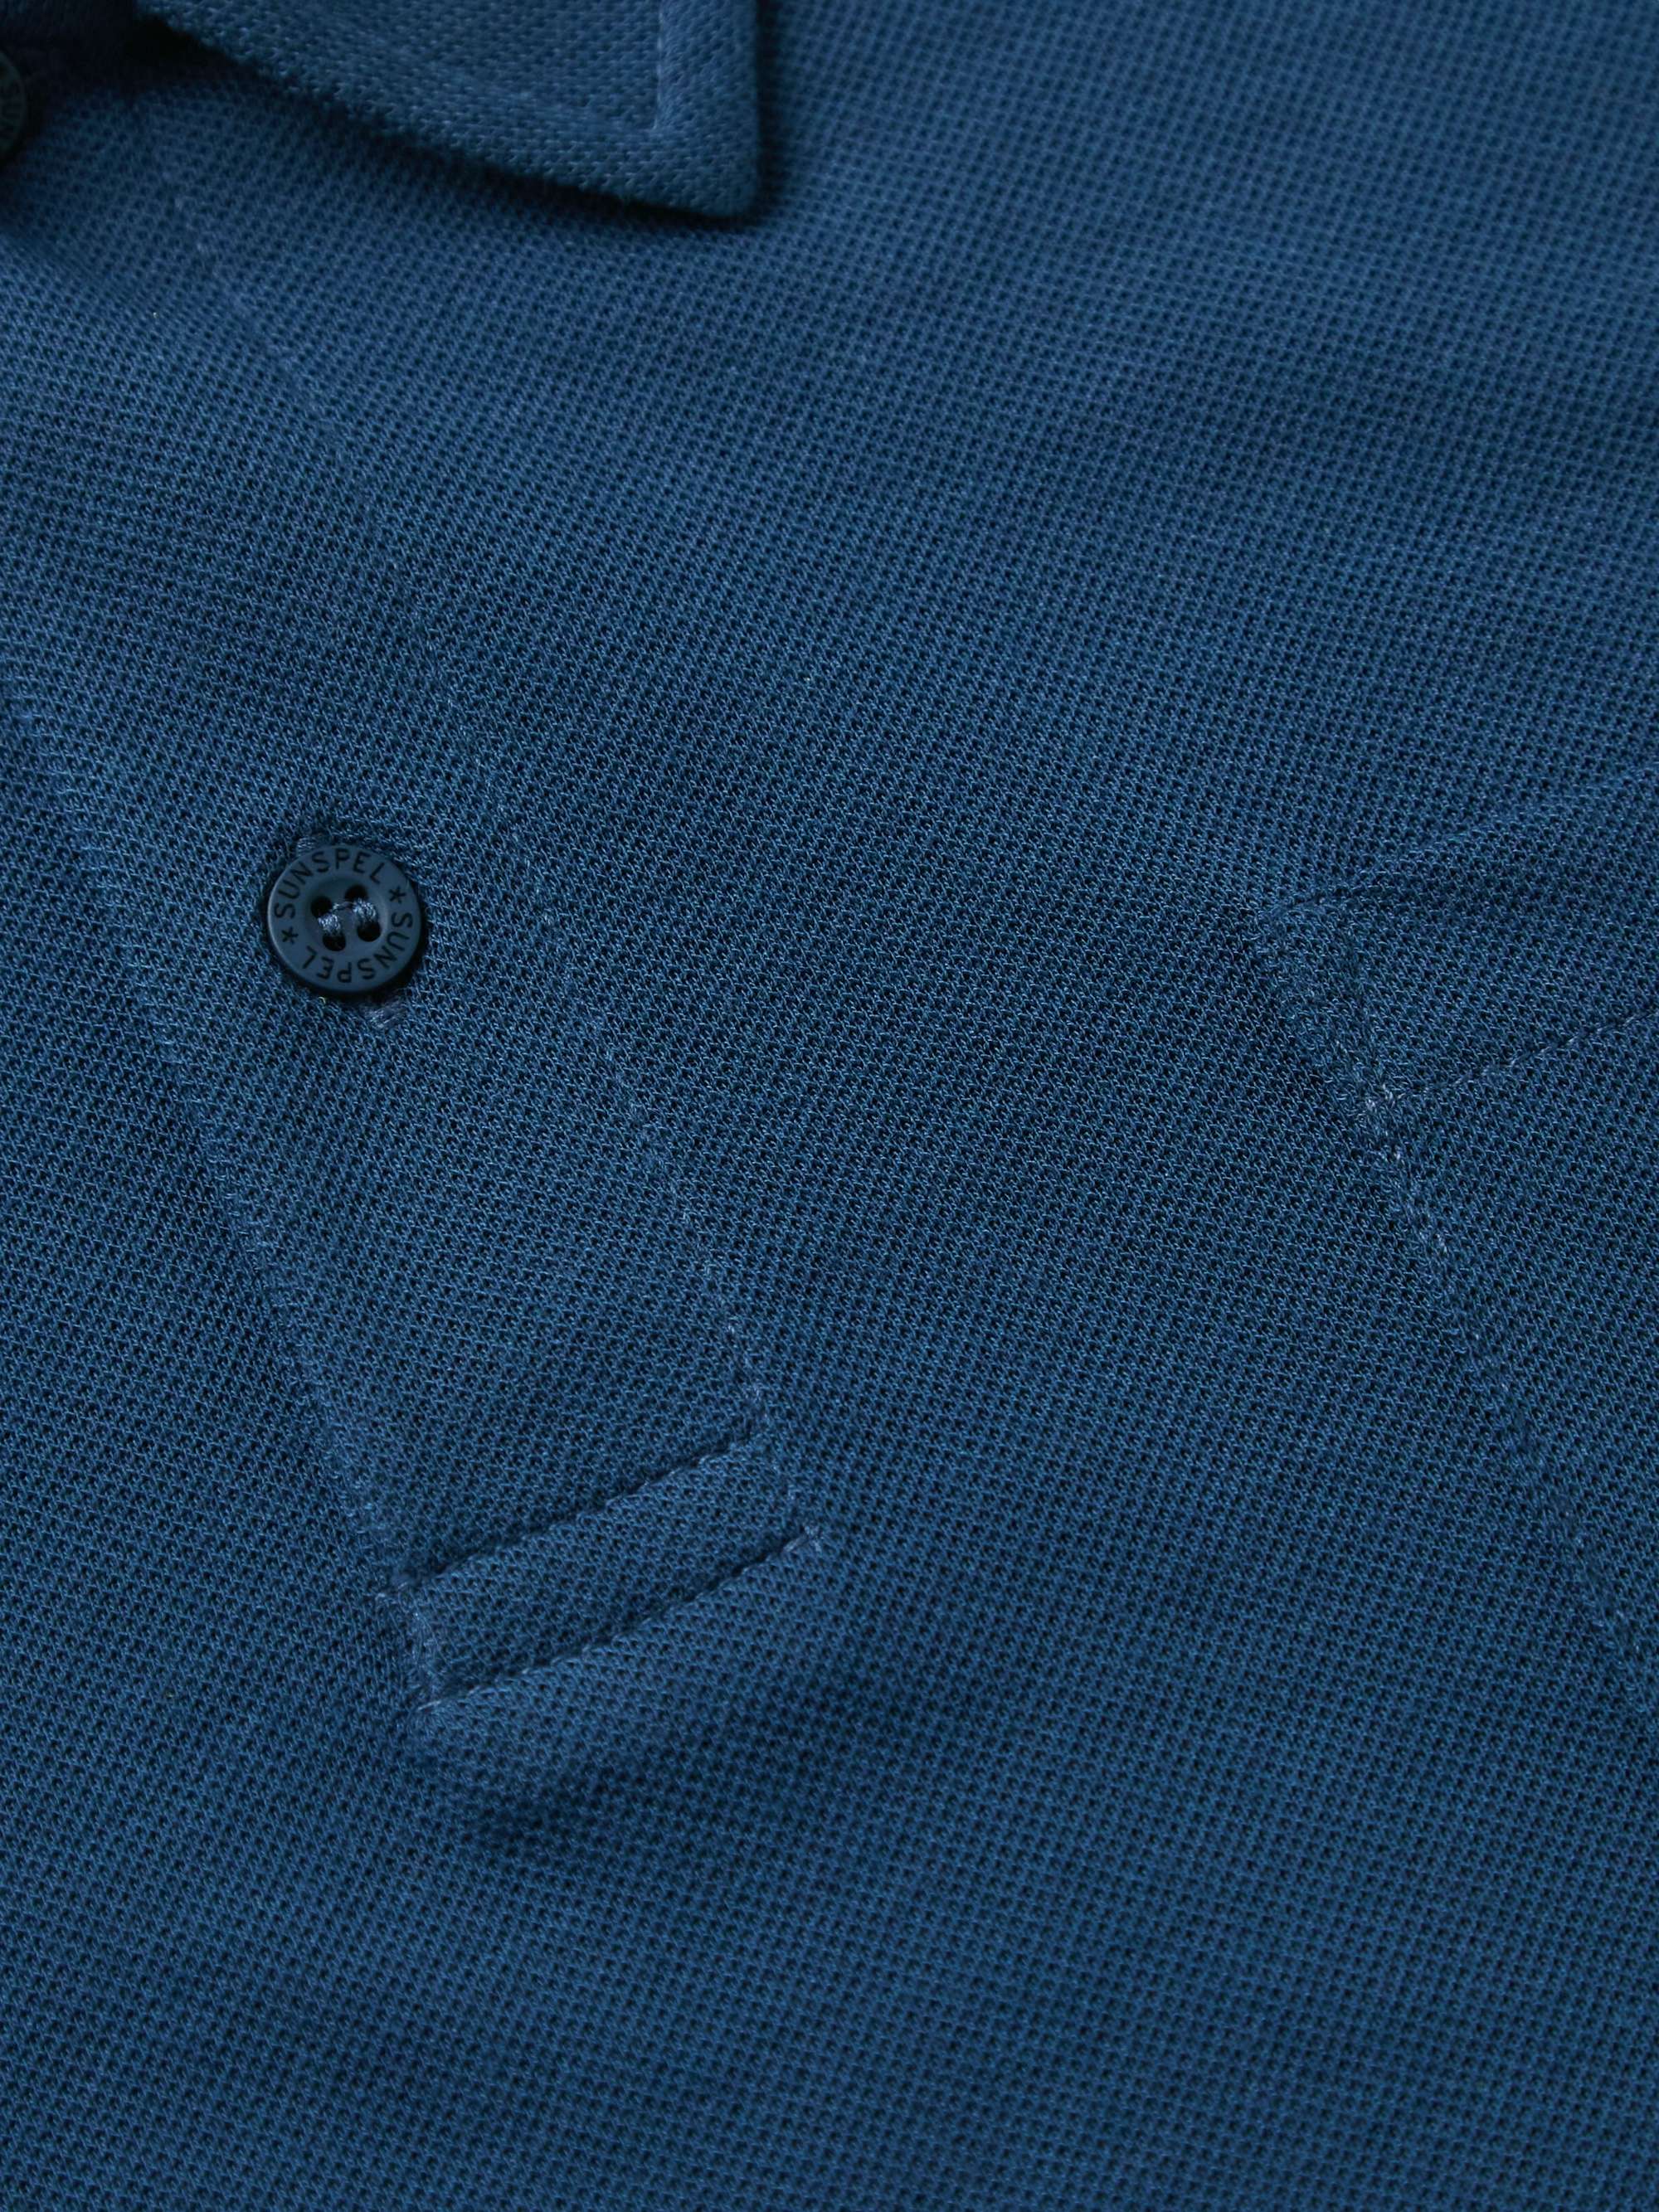 SUNSPEL Dri-Release Piqué Polo Shirt